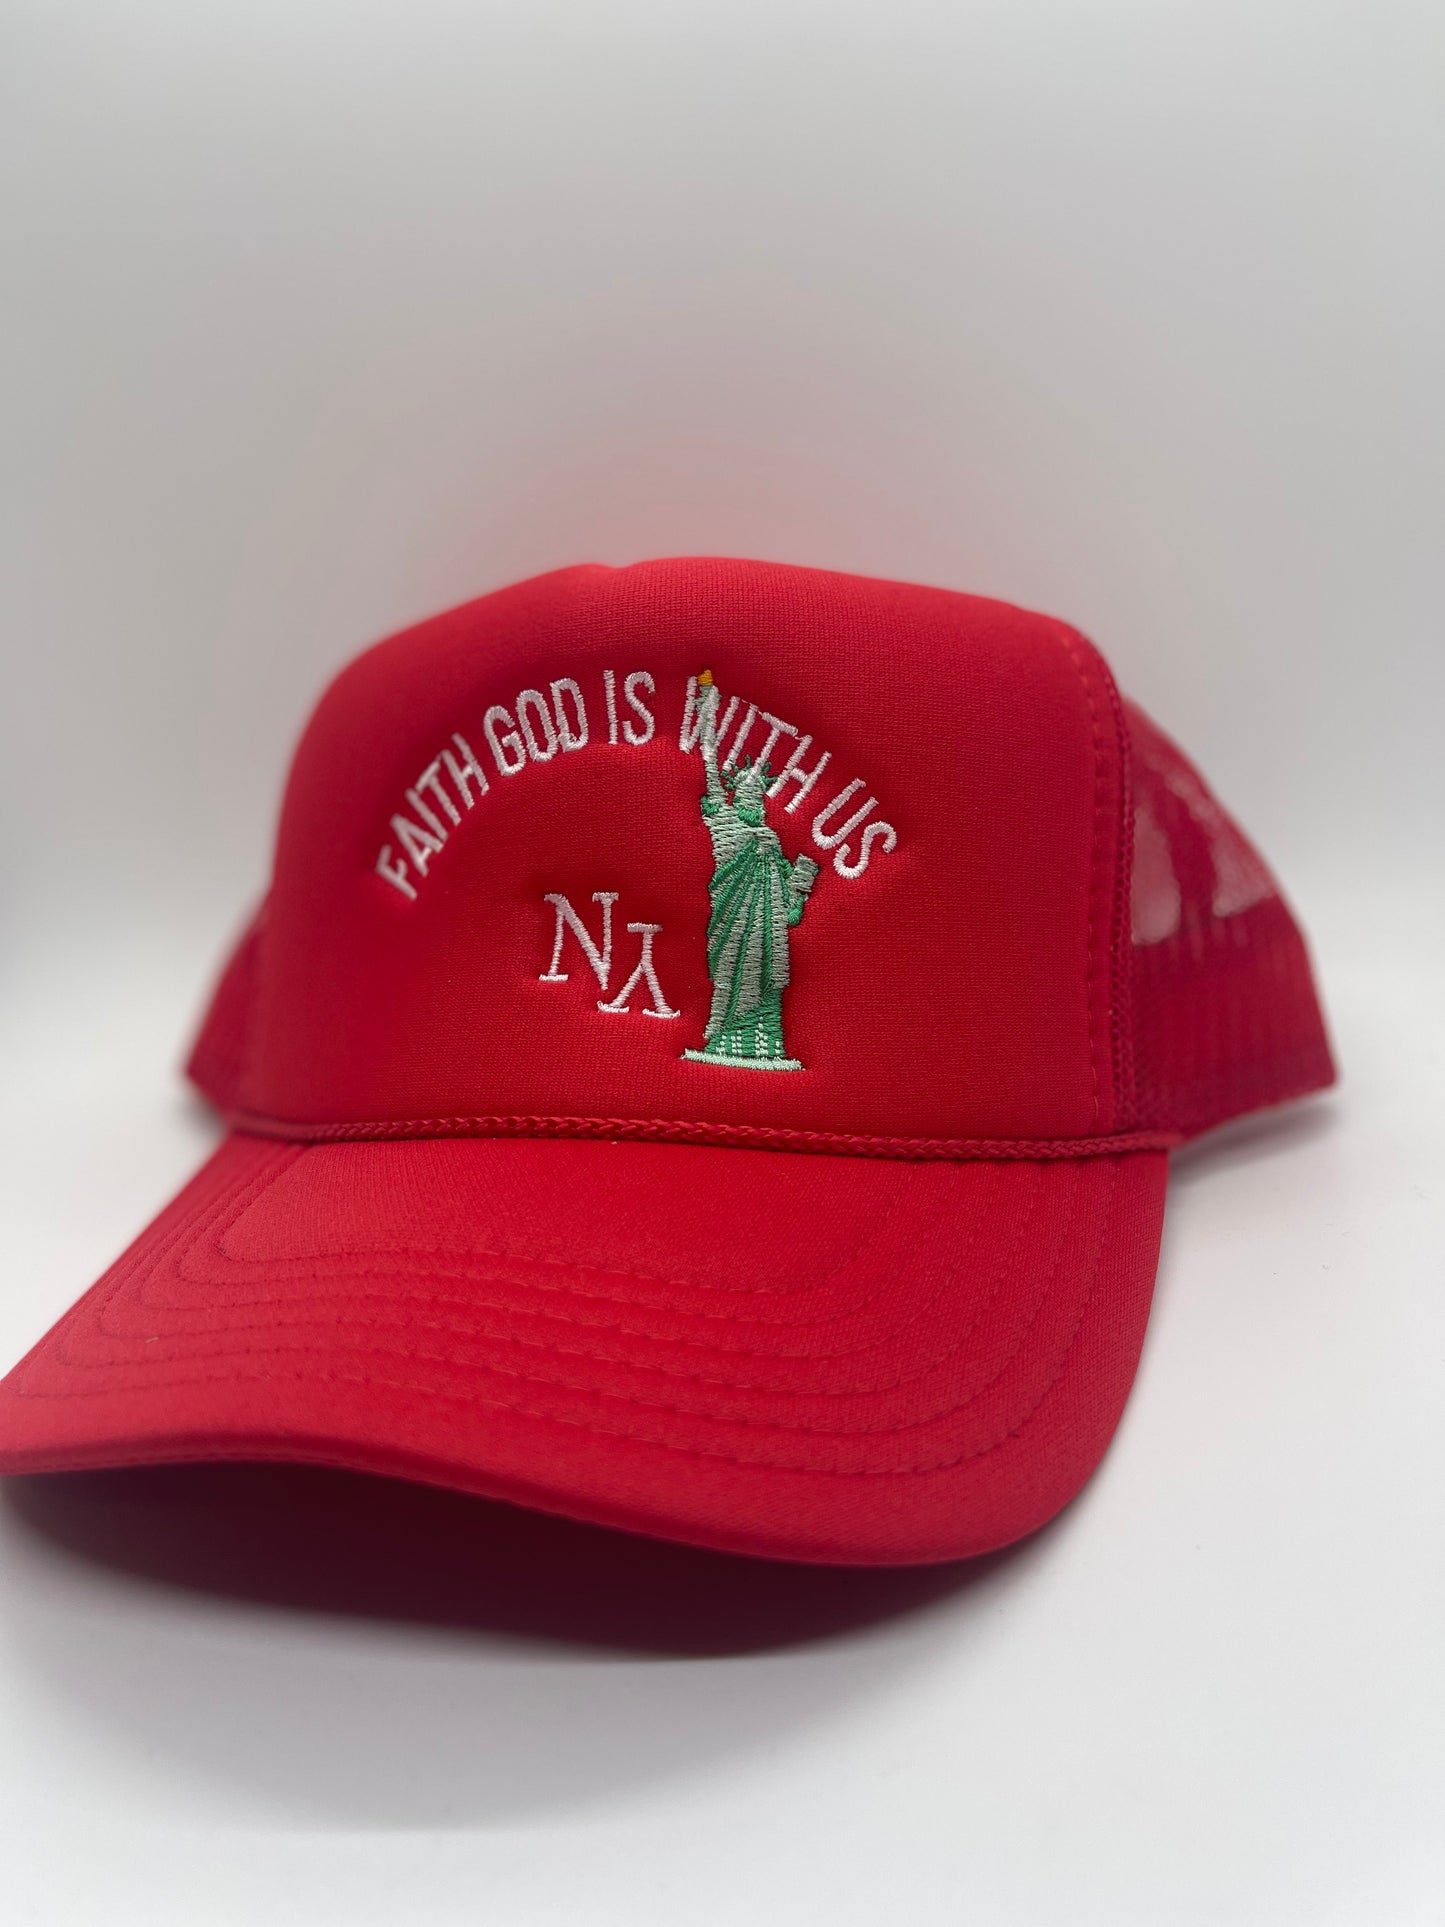 Special Edition NY Trucker Hat